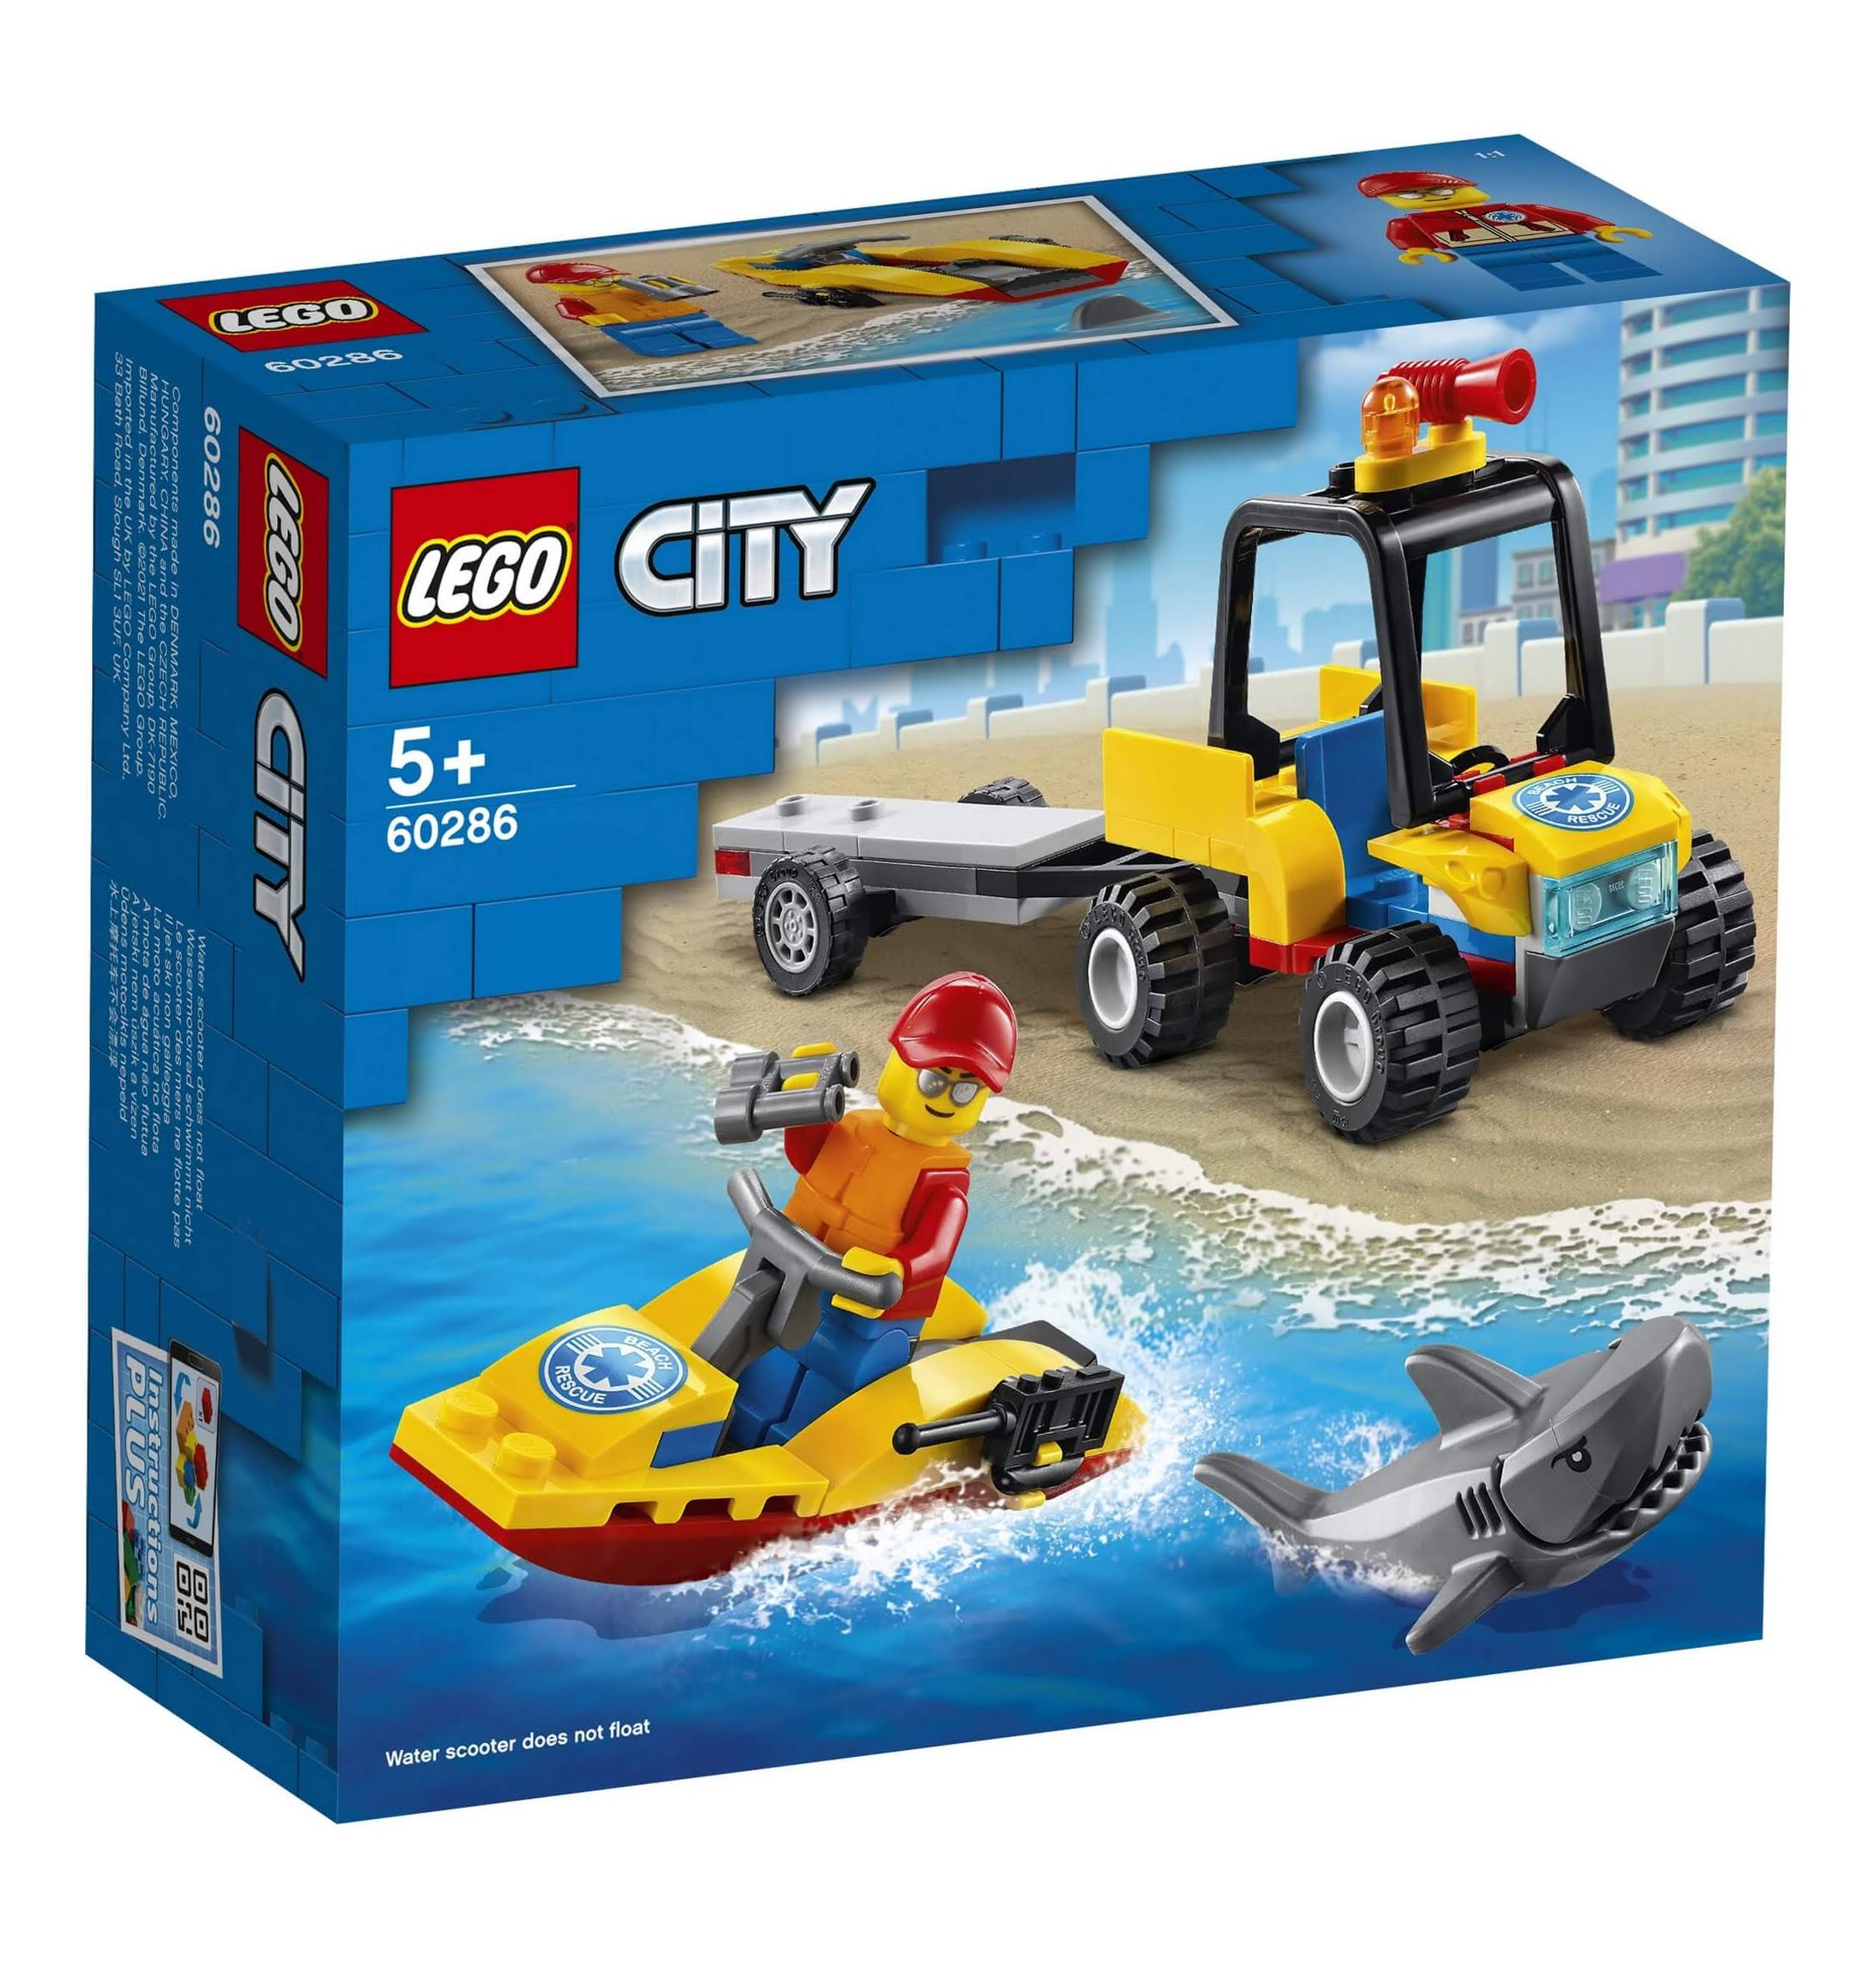 Lego Toy, City